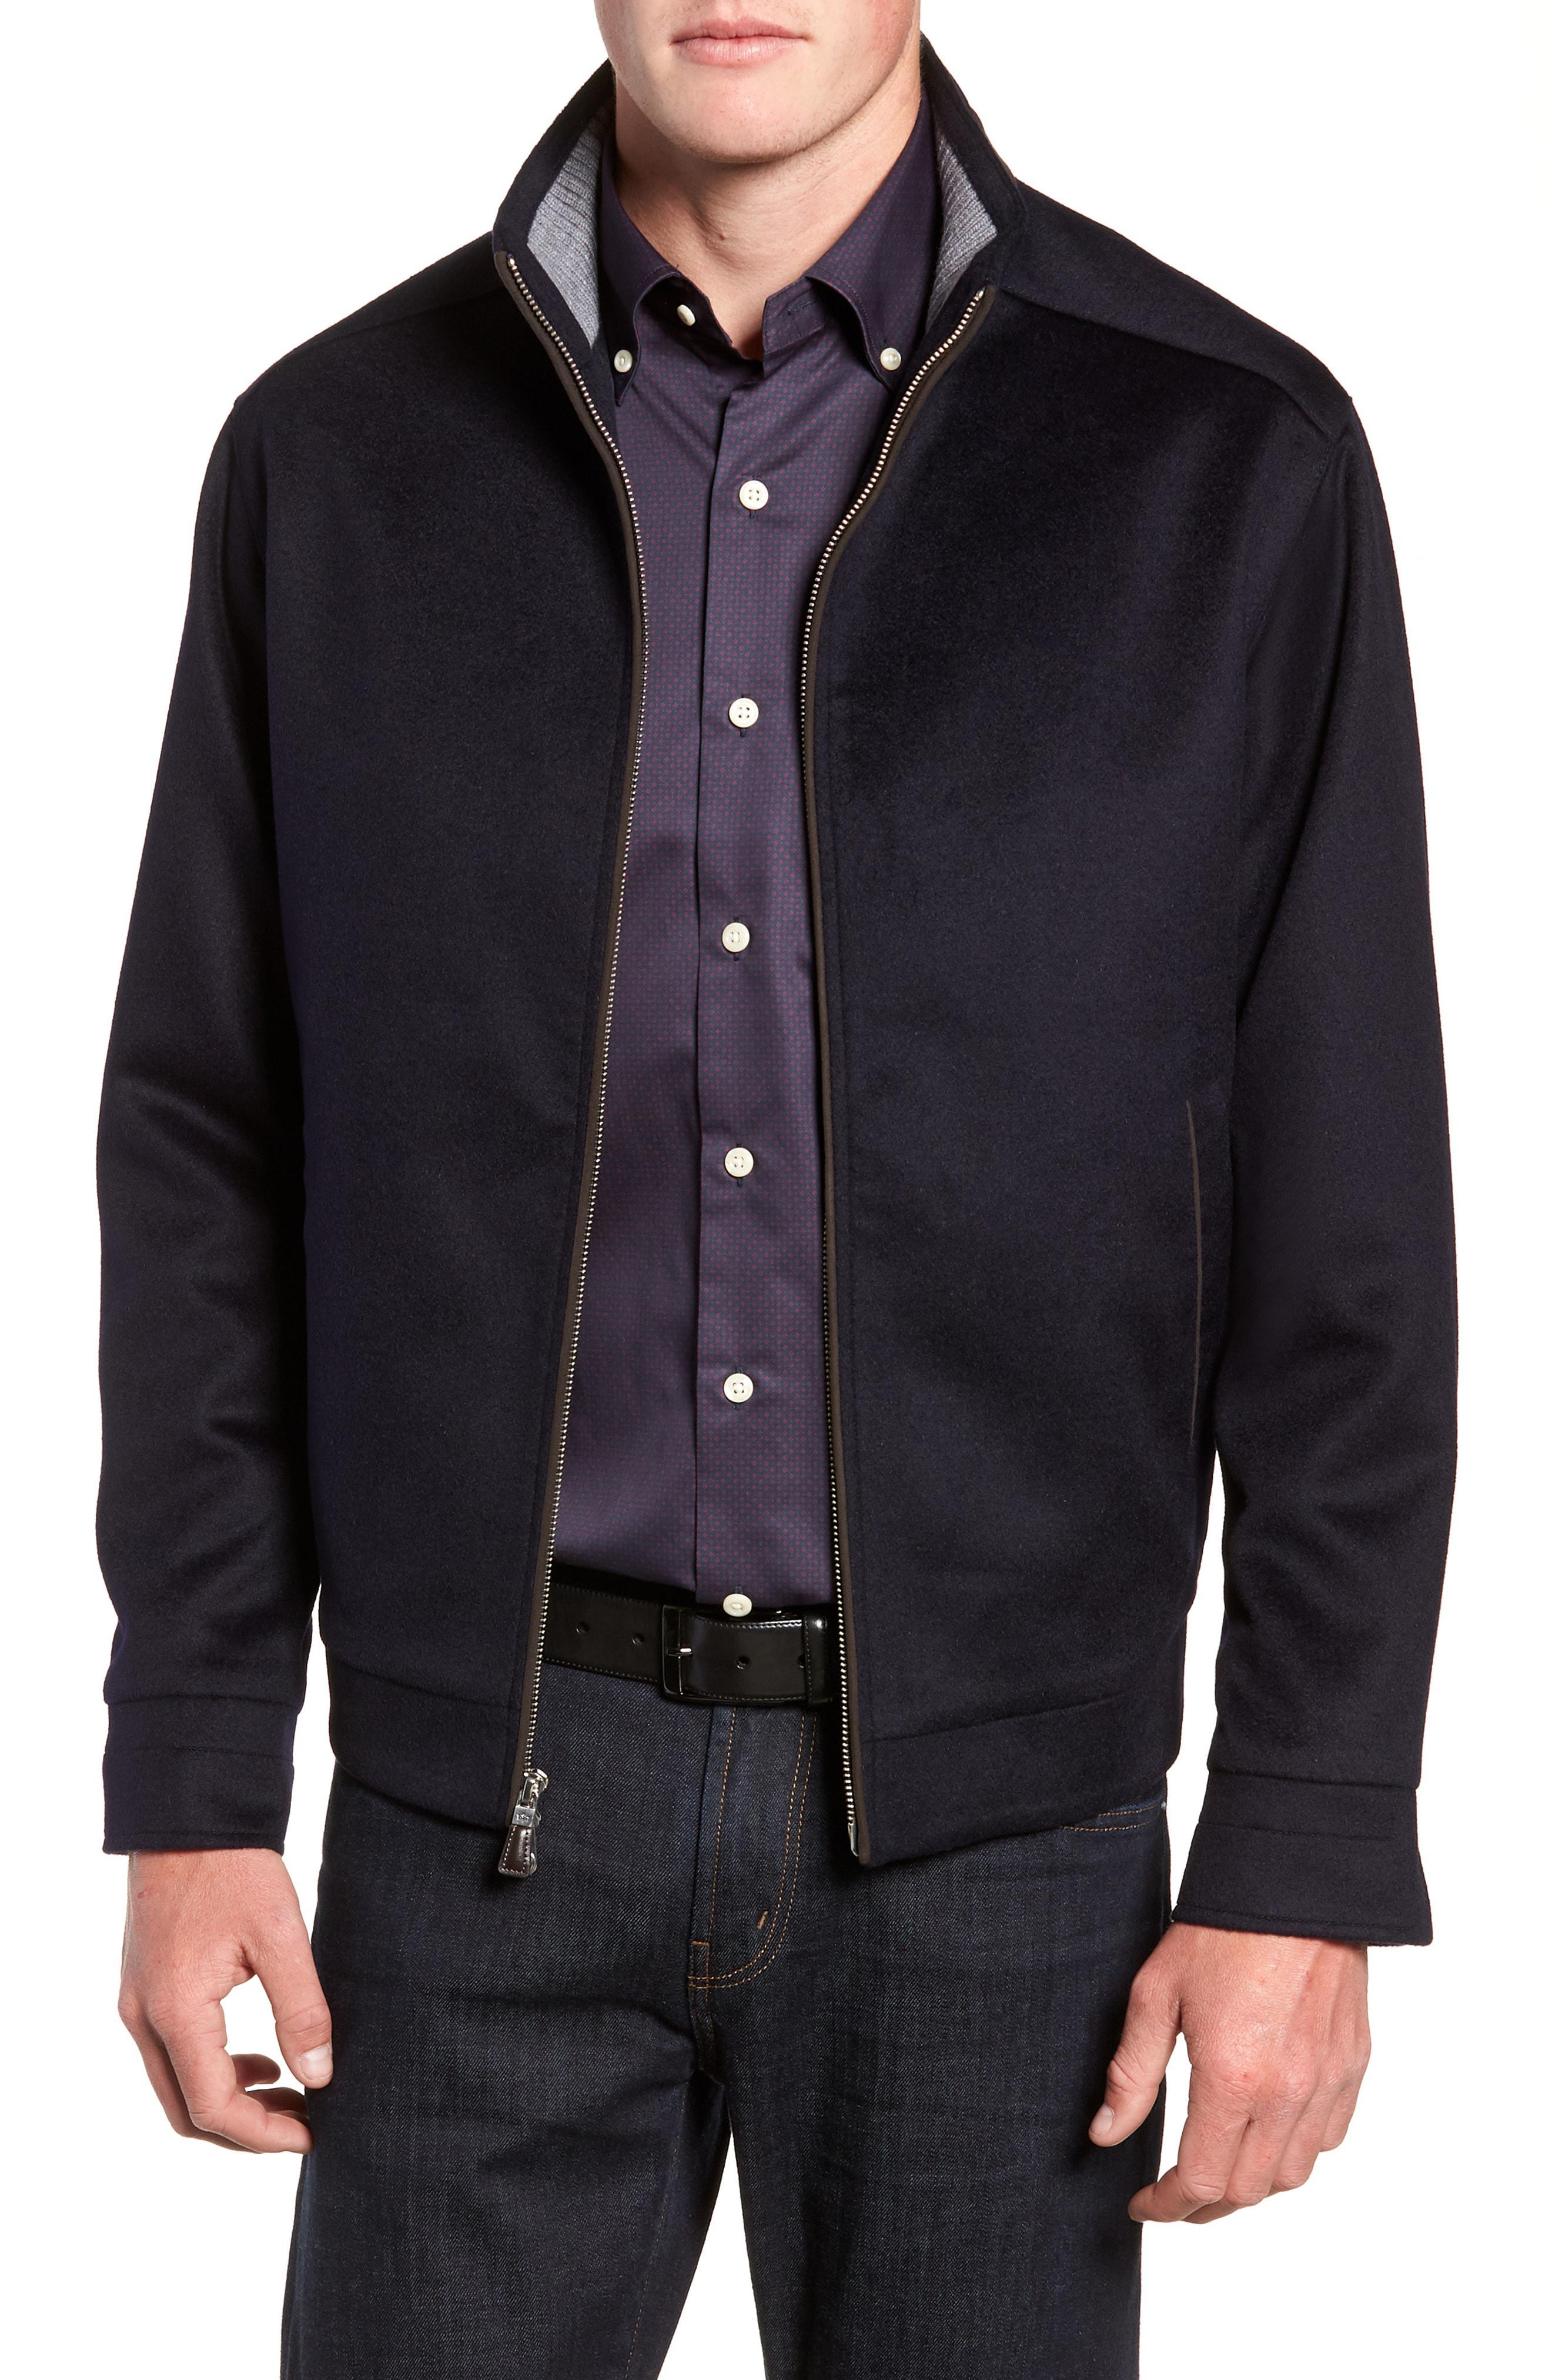 Peter Millar Westport Crown Wool & Cashmere Jacket in Black for Men - Lyst